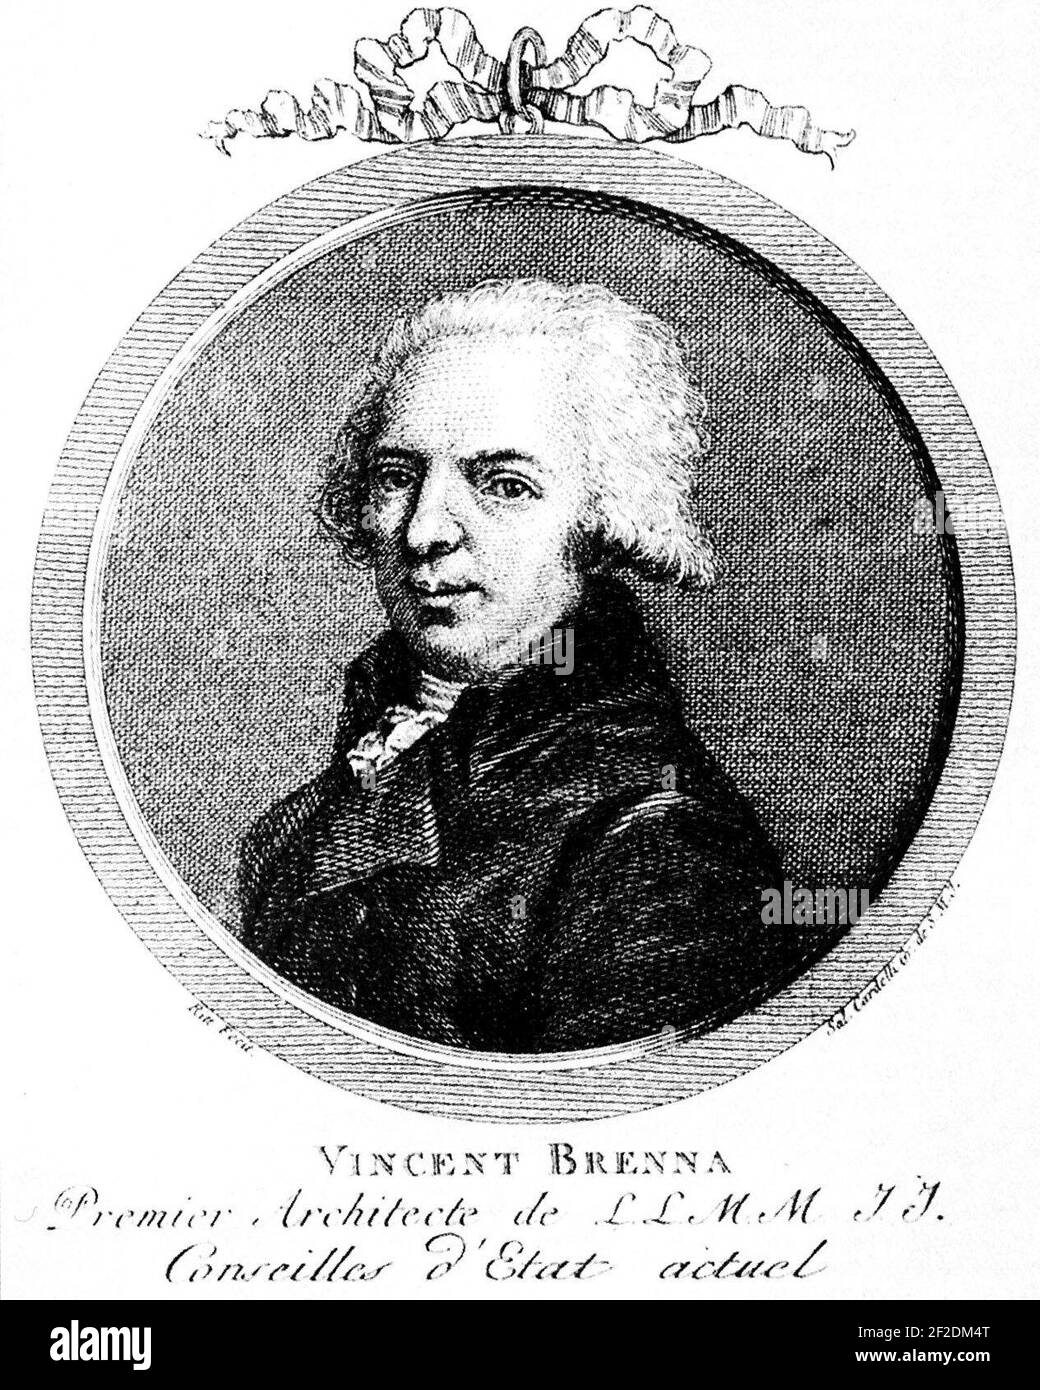 Portrait of Vincenzo Brenna (Cardelli, Ritt). Stock Photo